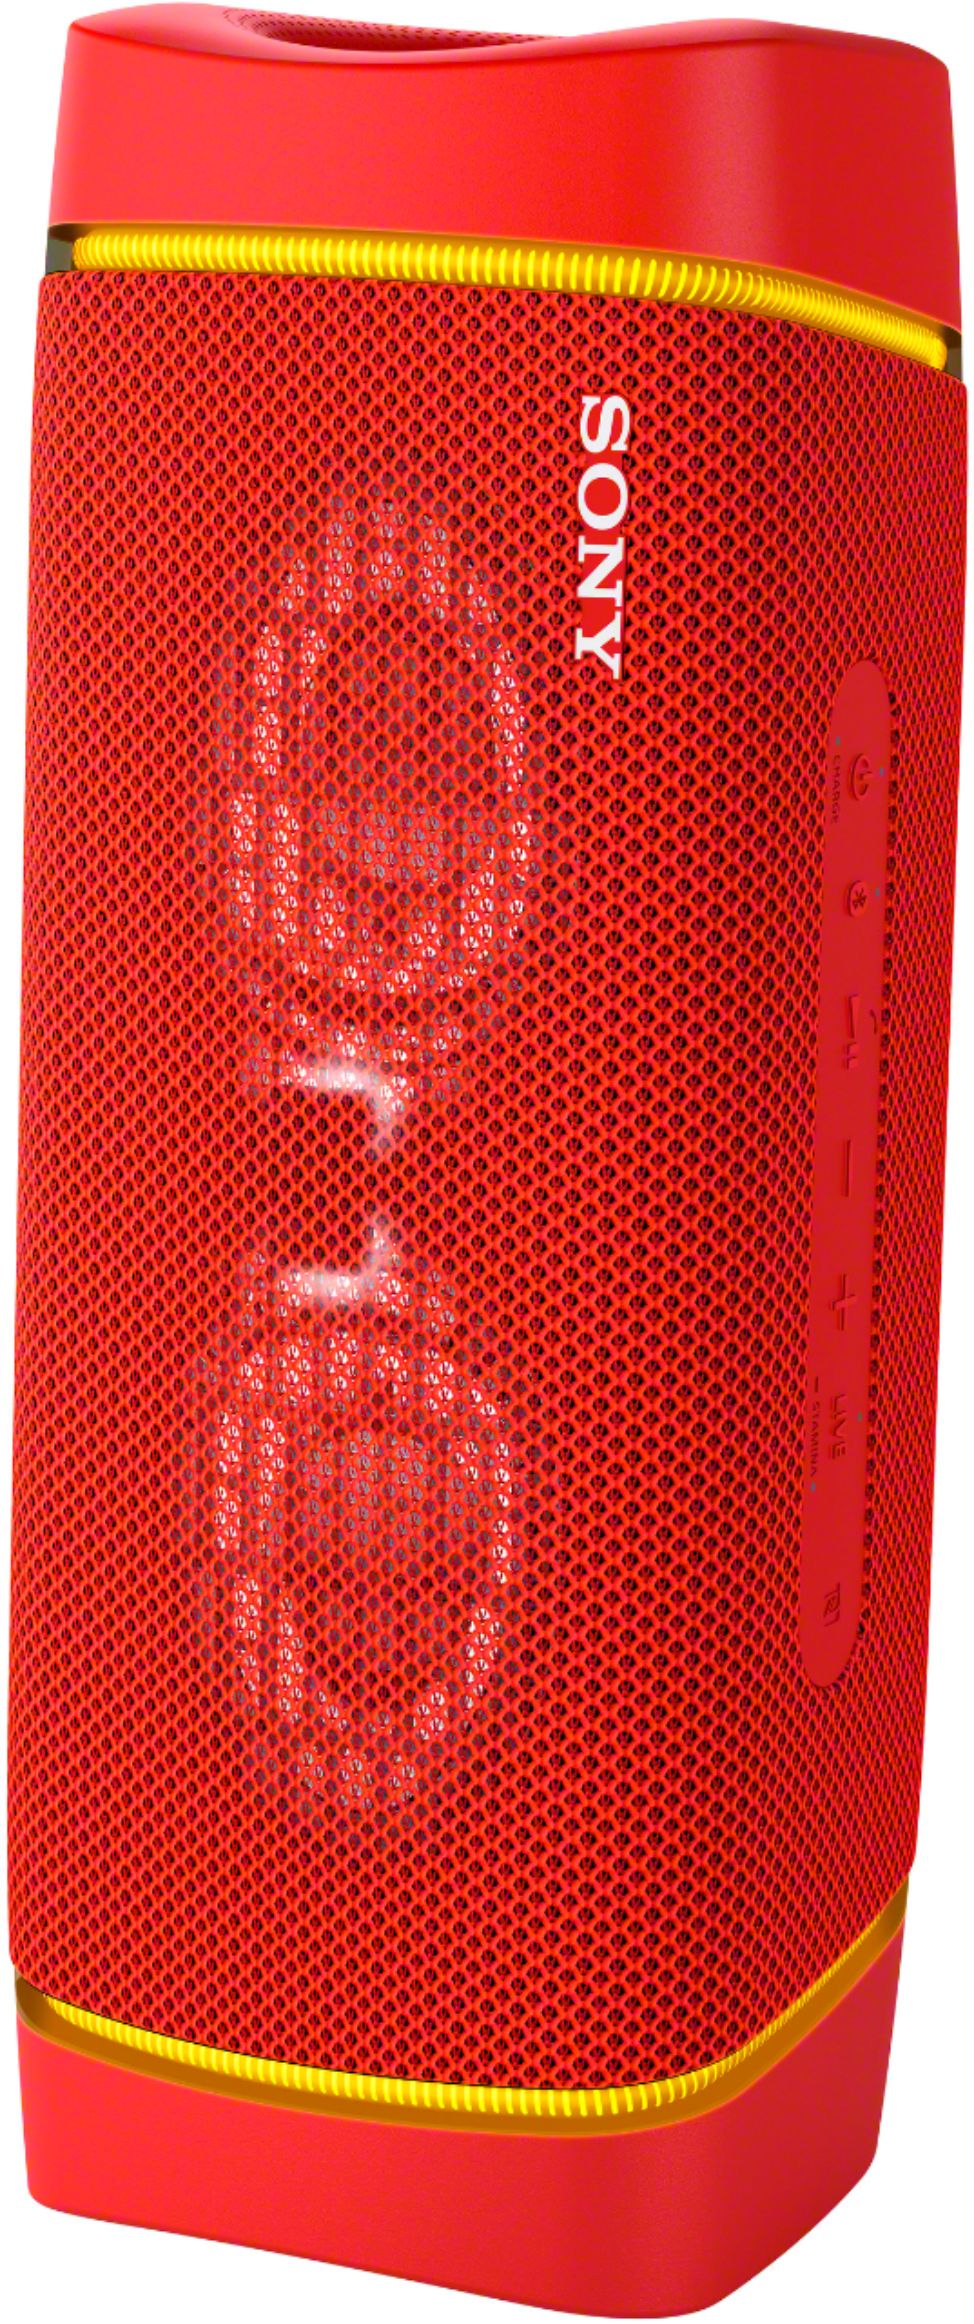 Sony Srs Xb33 Portable Waterproof Rustproof Speaker With Usb Charging Port Coral Red Srsxb33 R Best Buy